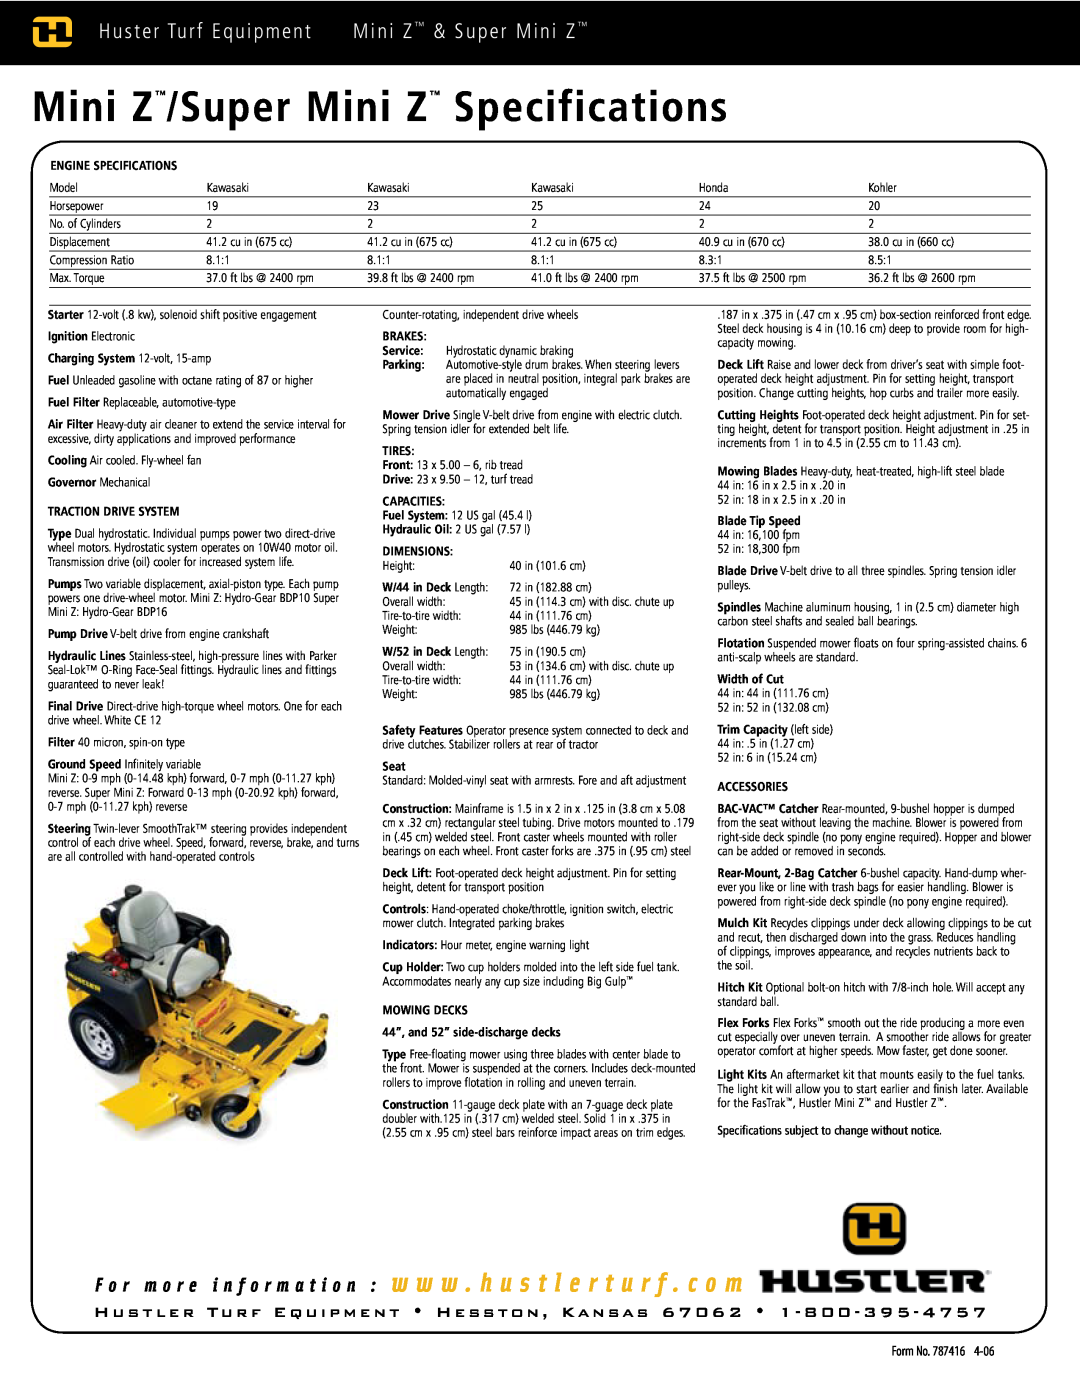 Hustler Turf Lawn Mowe specifications Mini Z/Super Mini Z Specifications, Huster Turf Equipment Mini Z & Super Mini Z 